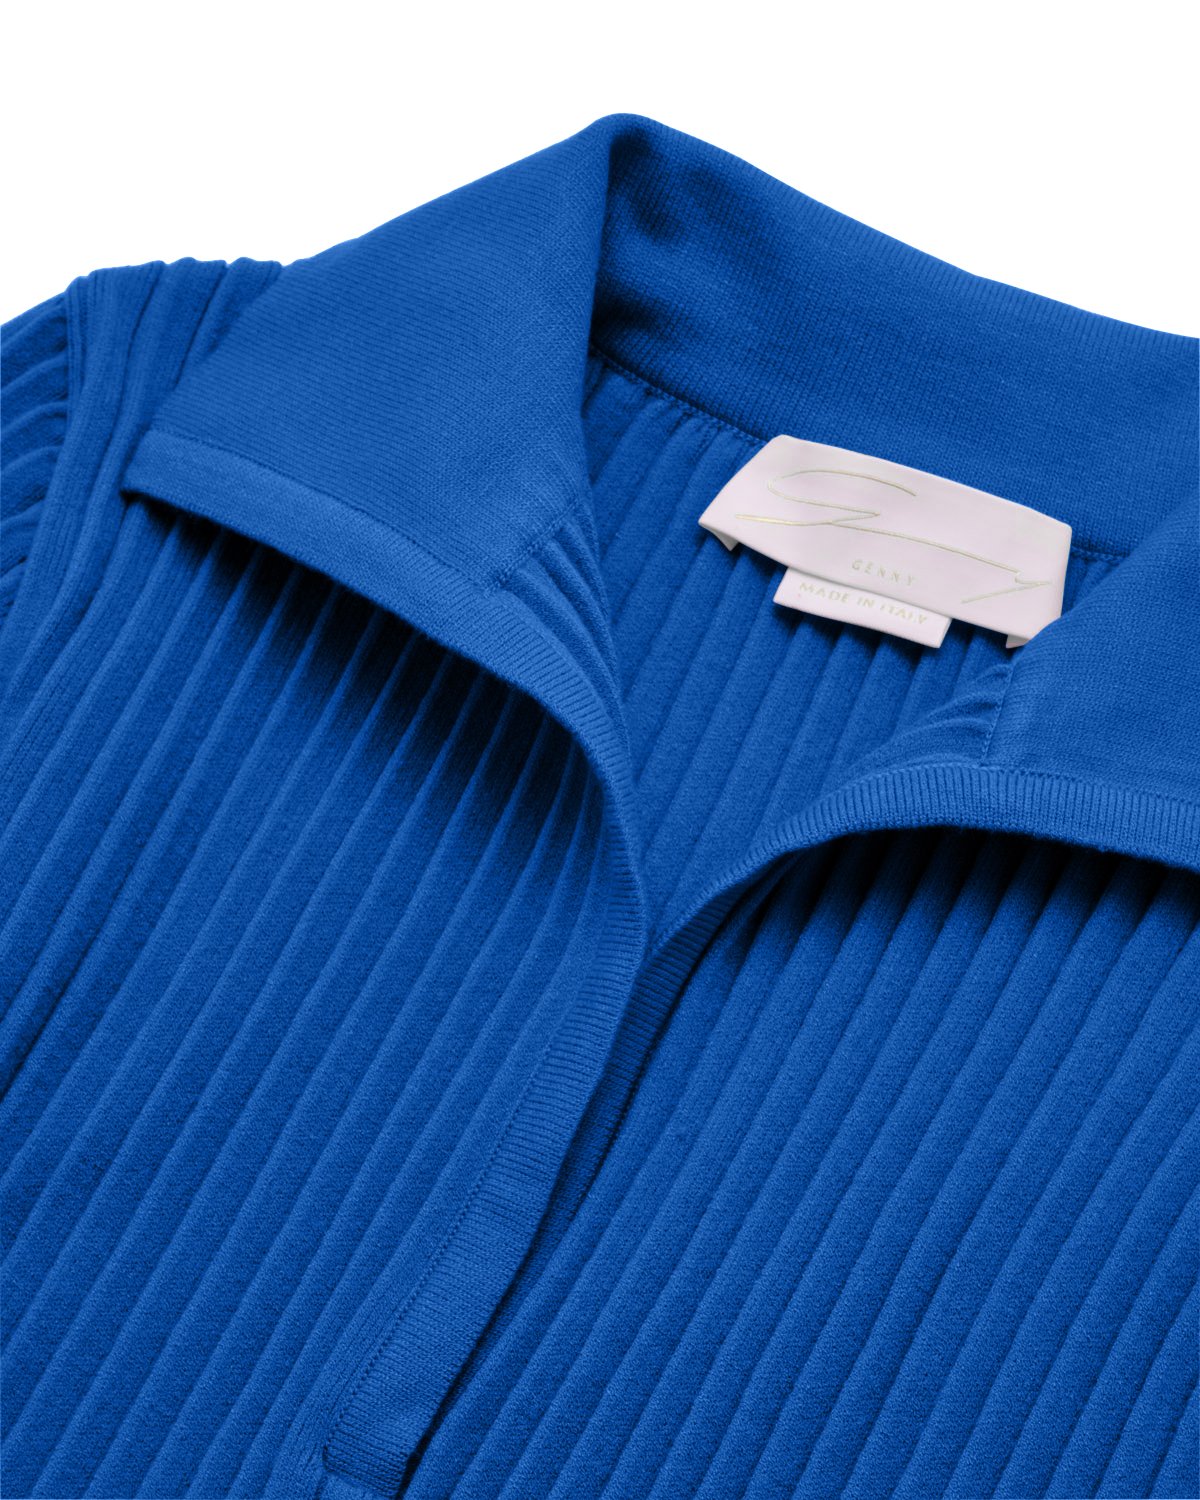 Blue V-neck dress with collar | 73_74, Mid season sale -40%, Summer Sale | Genny